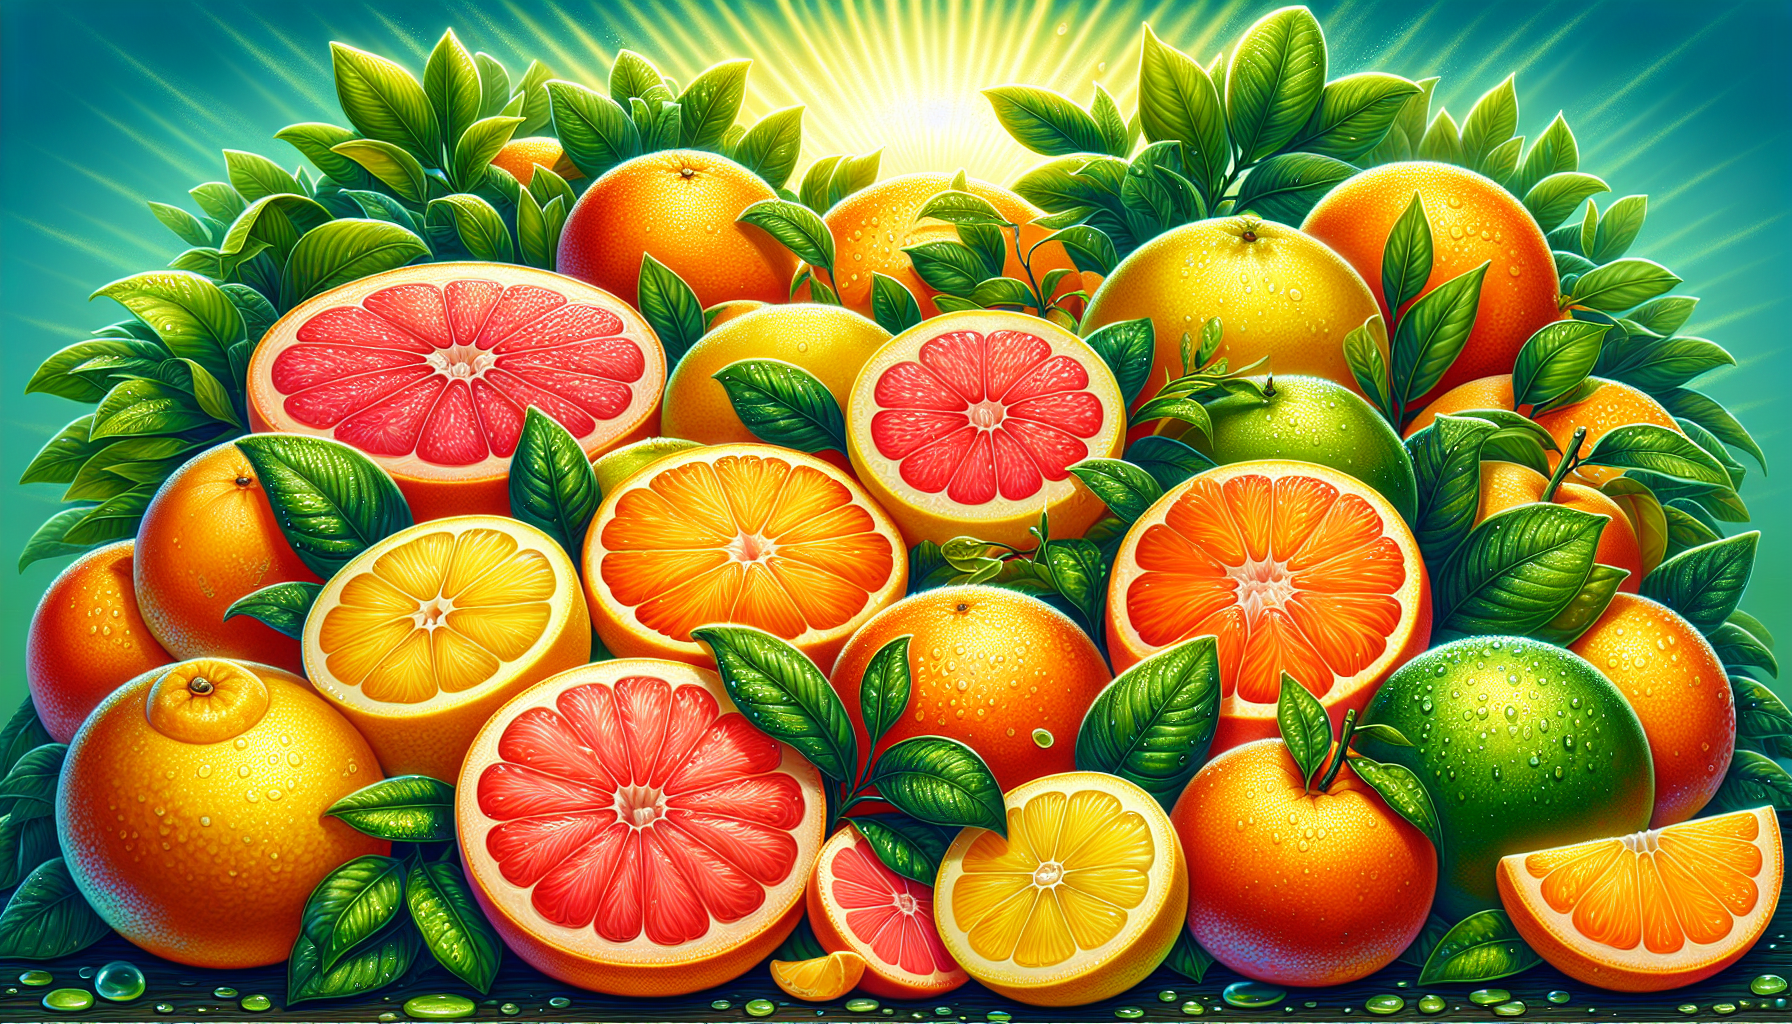 Illustration of citrus fruits like oranges and lemons, rich in vitamin C